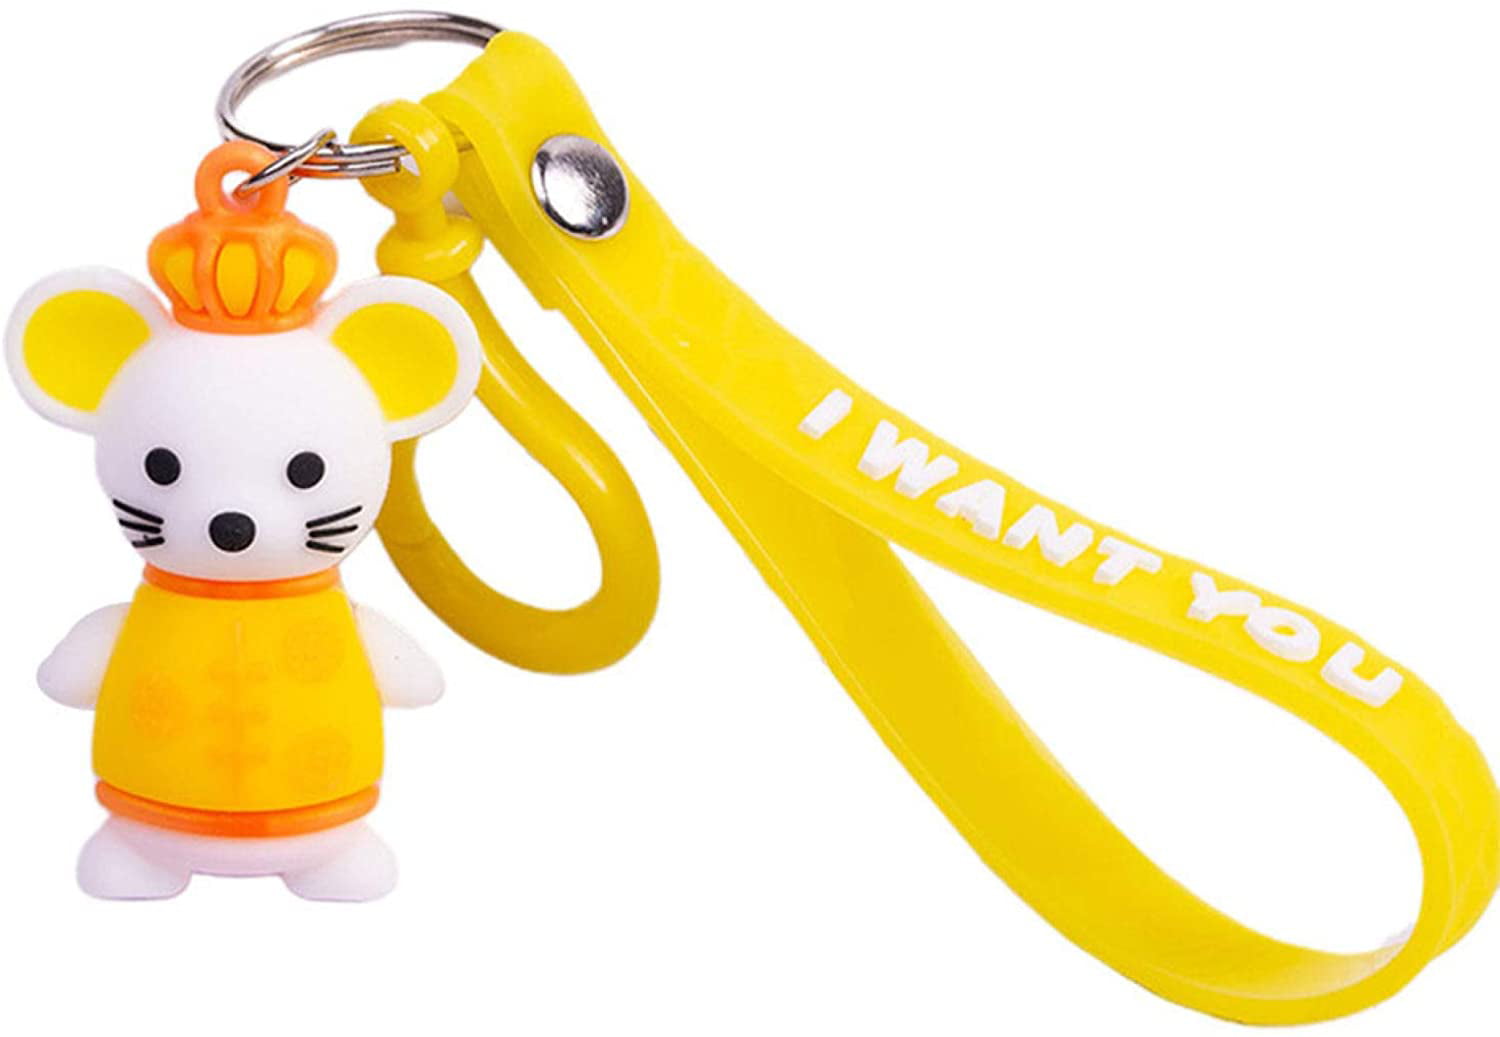 Alpaca Keychain Cartoon Doll Car Key Ring Student School Bag Pendant Accessories